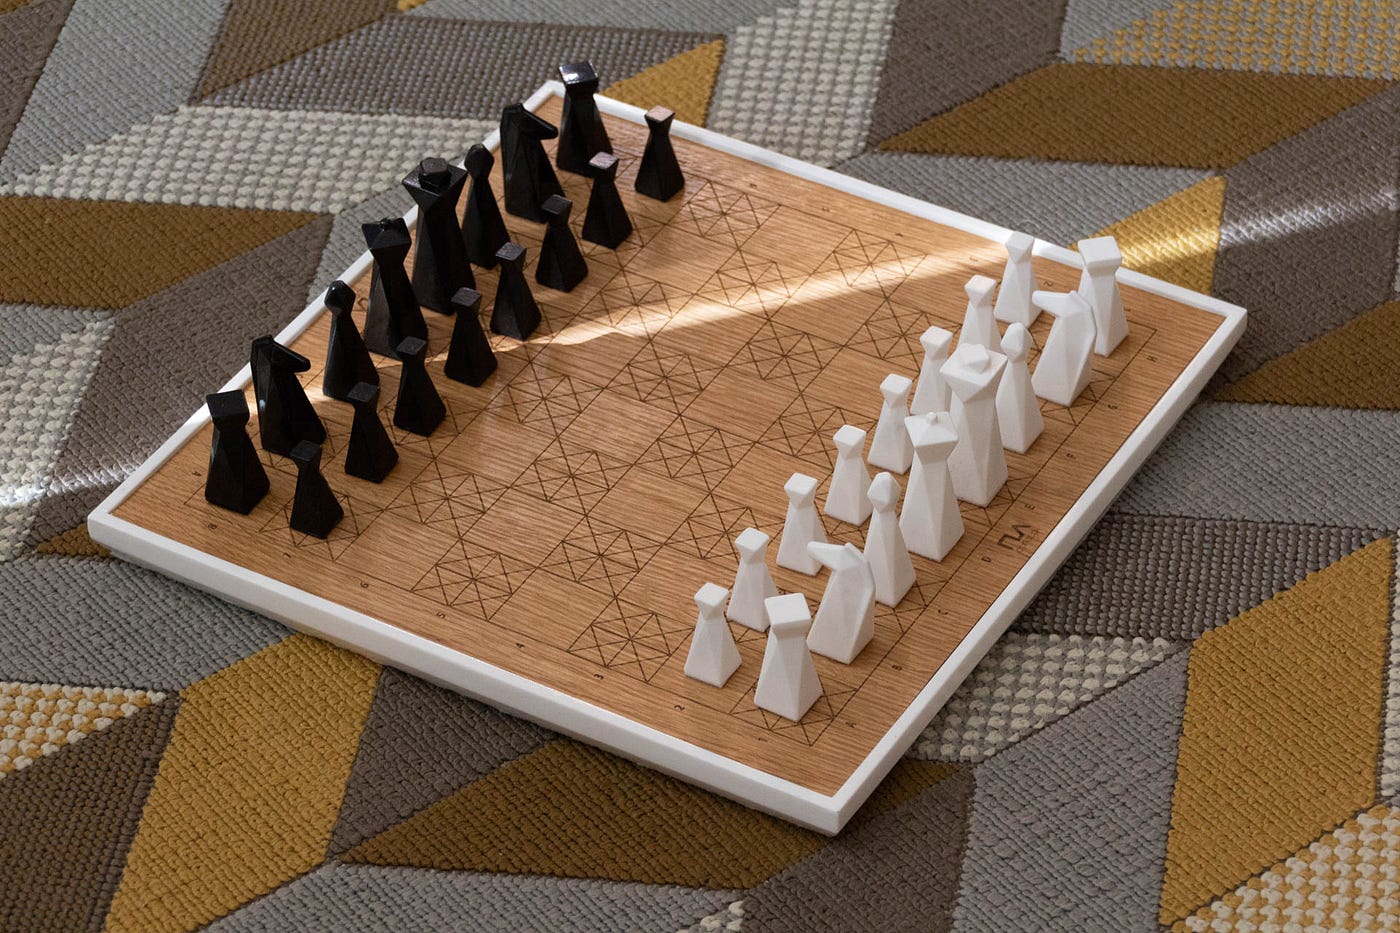 CNC Chess Set - Art of Play